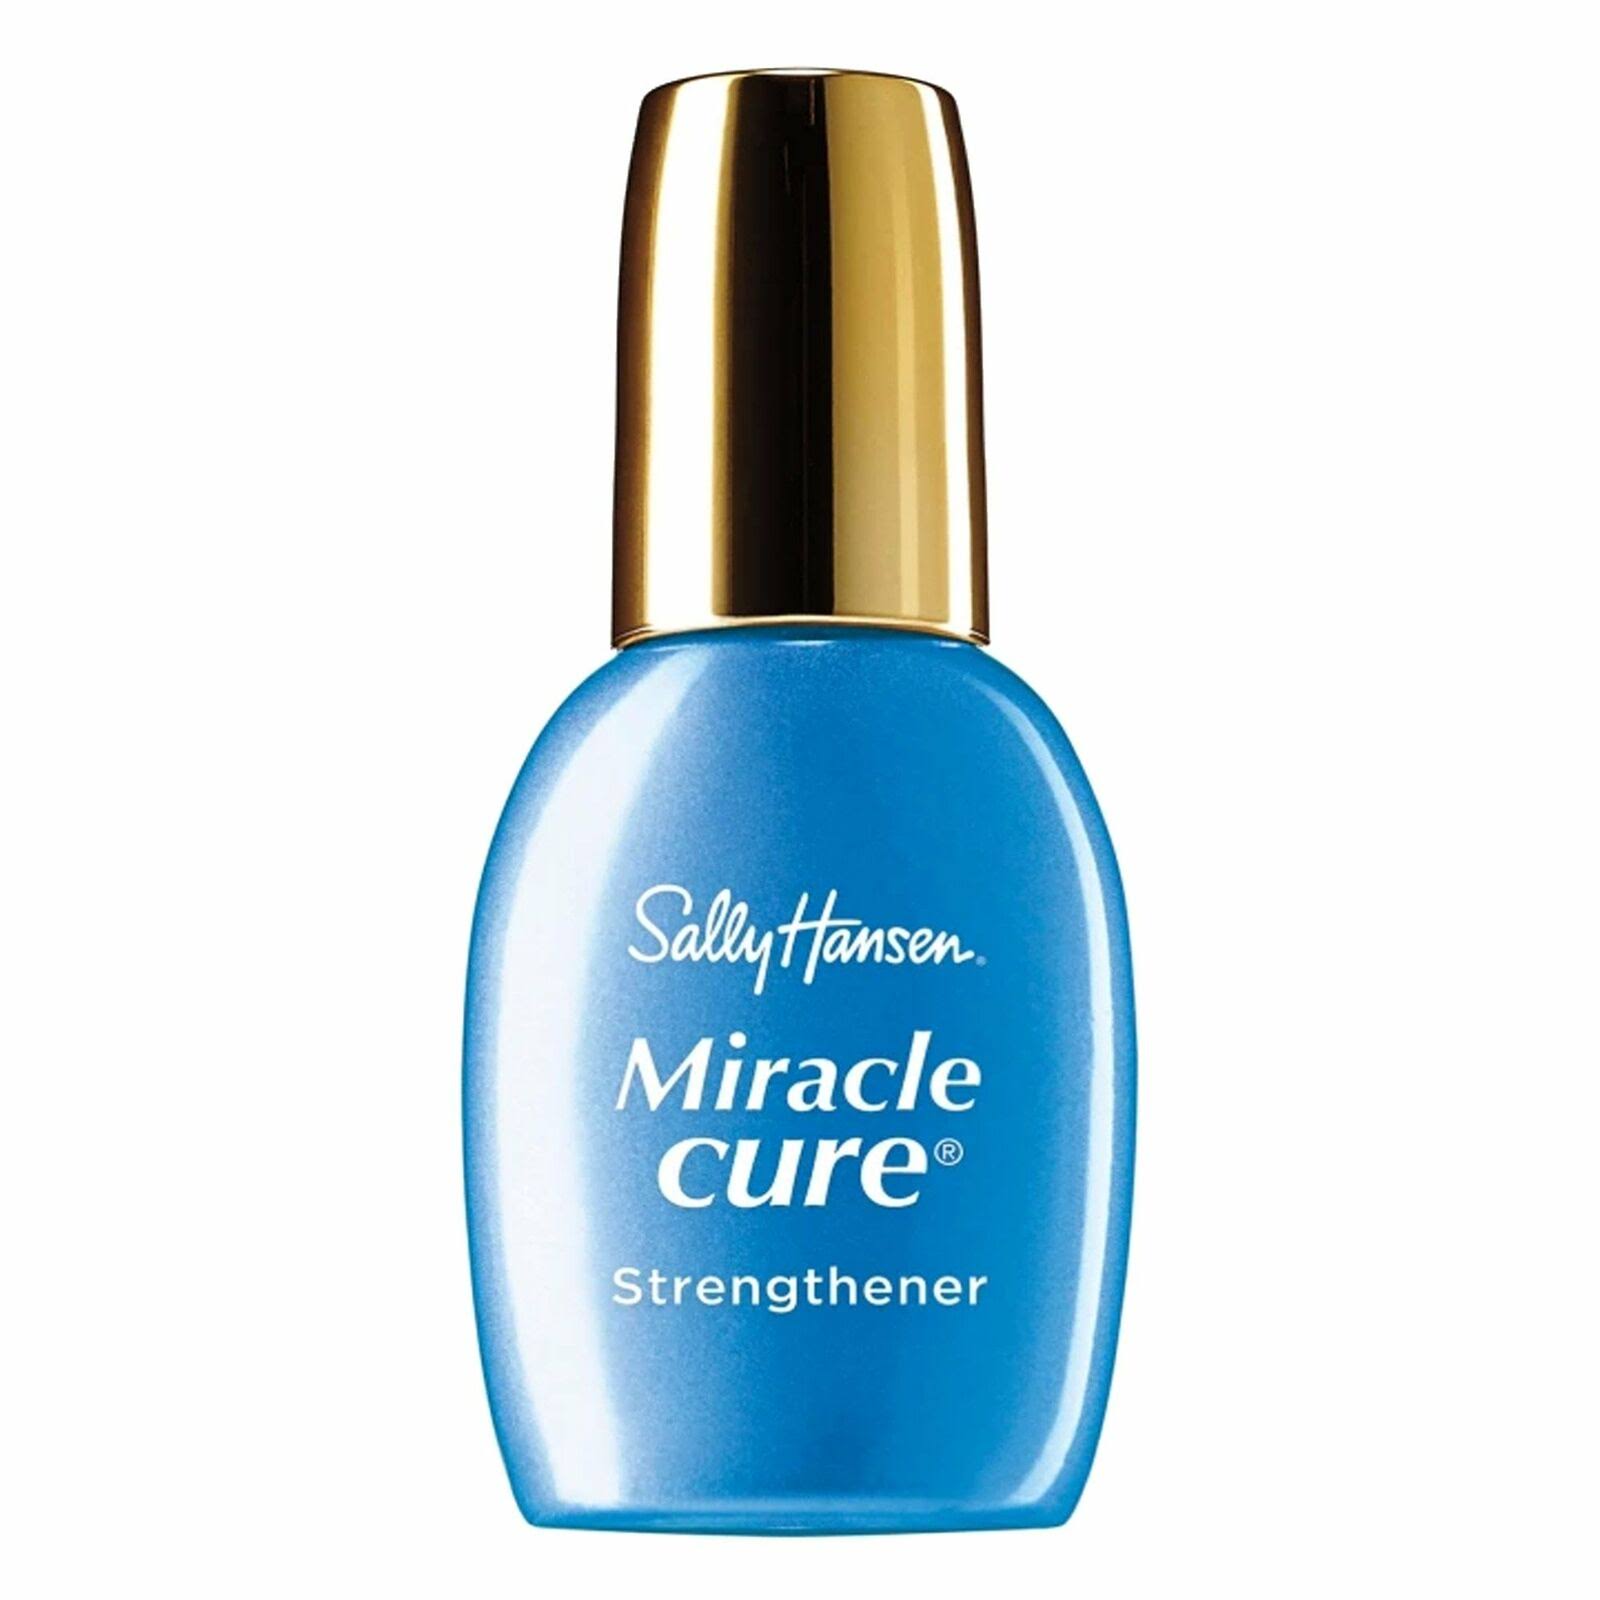 Sally Hansen Miracle Cure Strengthener, Clear - 0.45 fl oz bottle